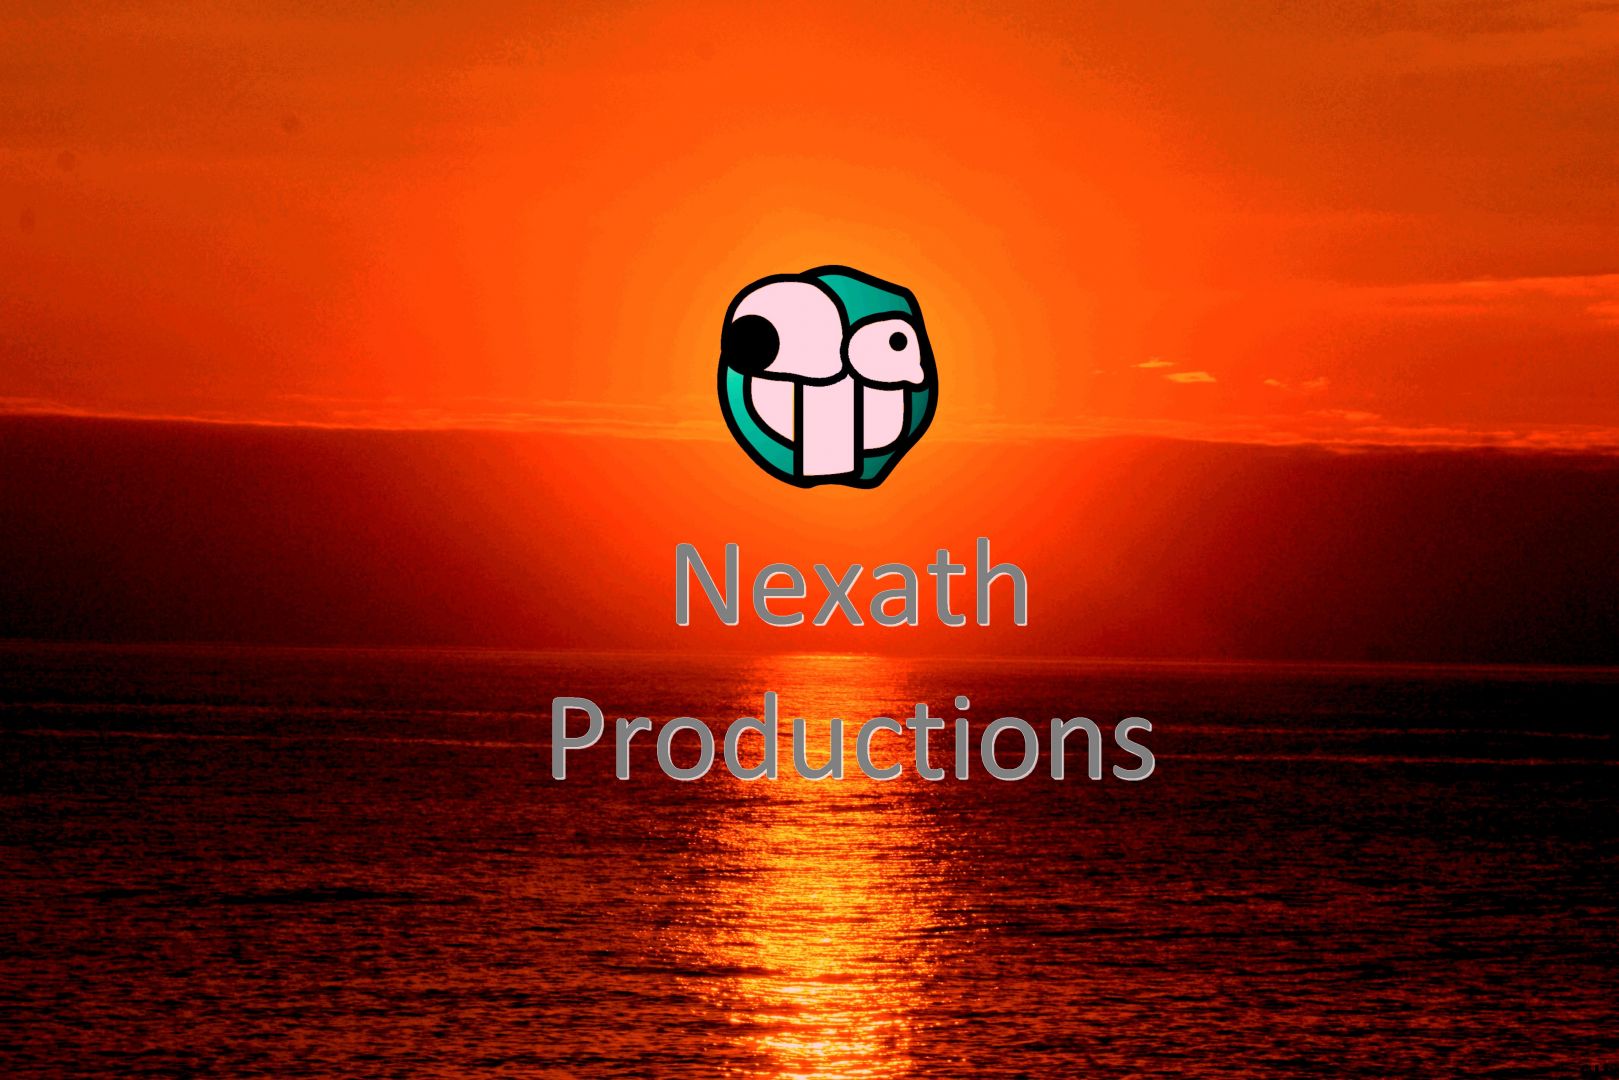 Nexath Productions